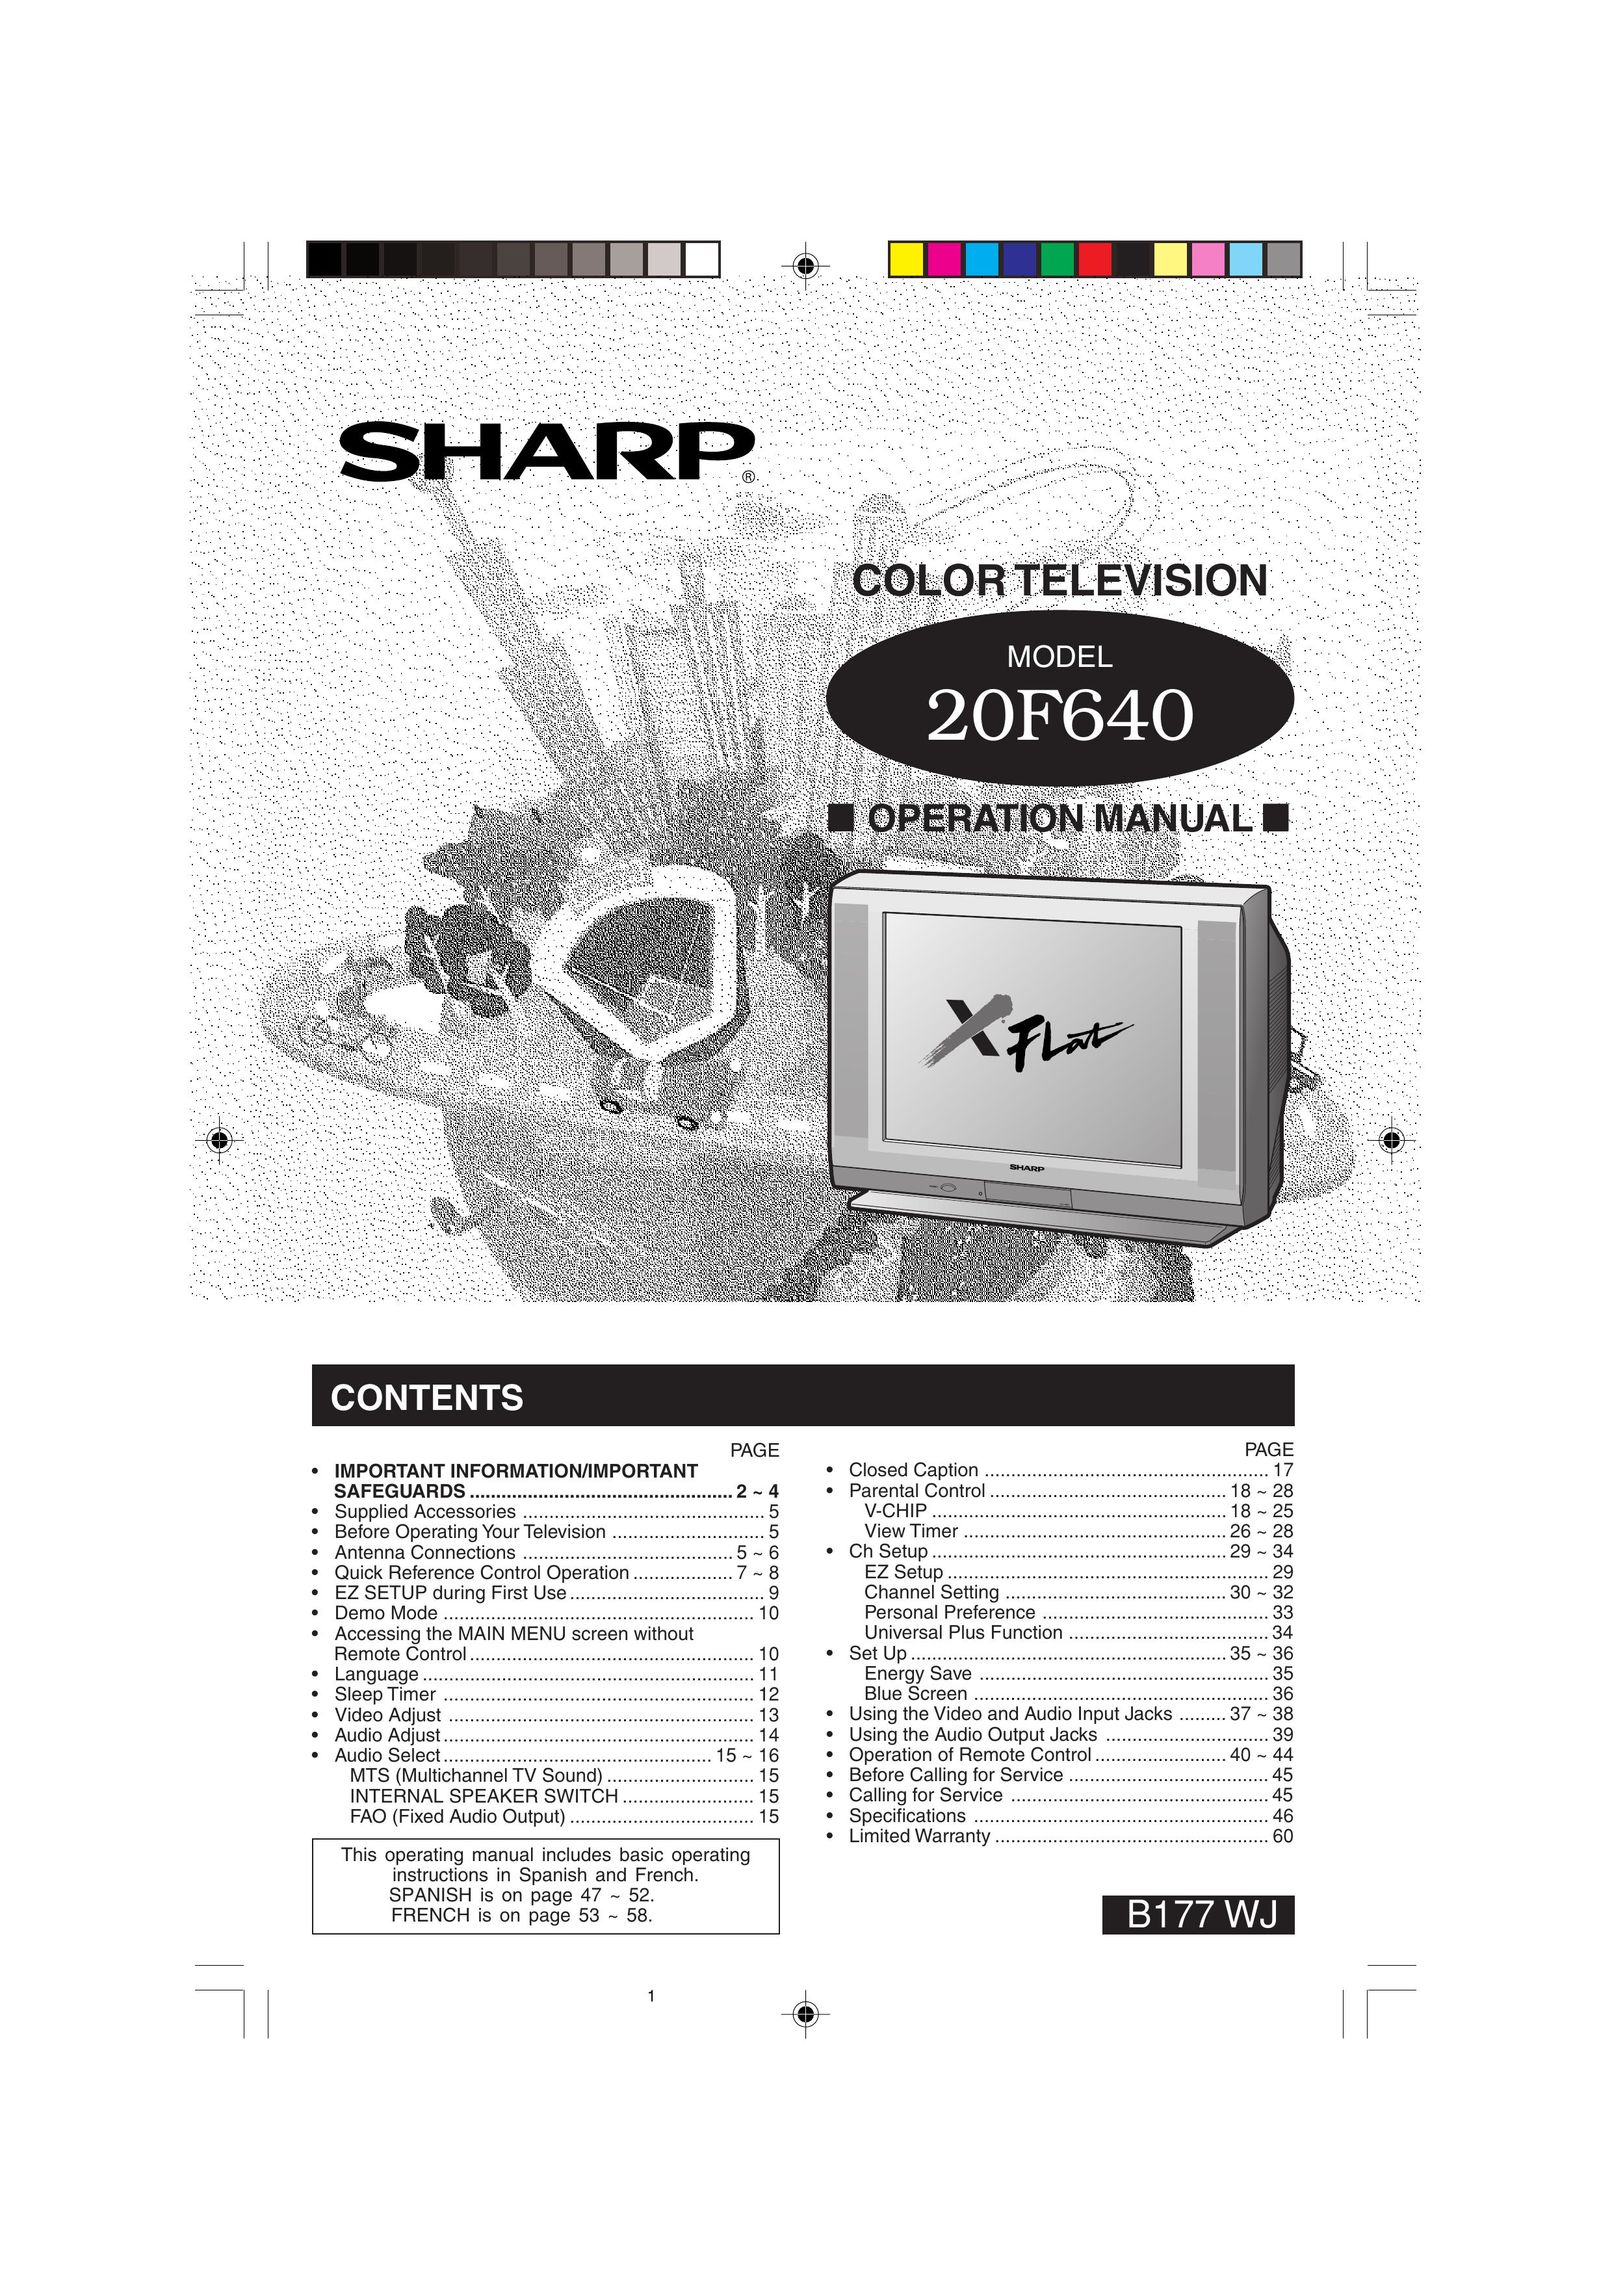 Sharp 20F640 CRT Television User Manual